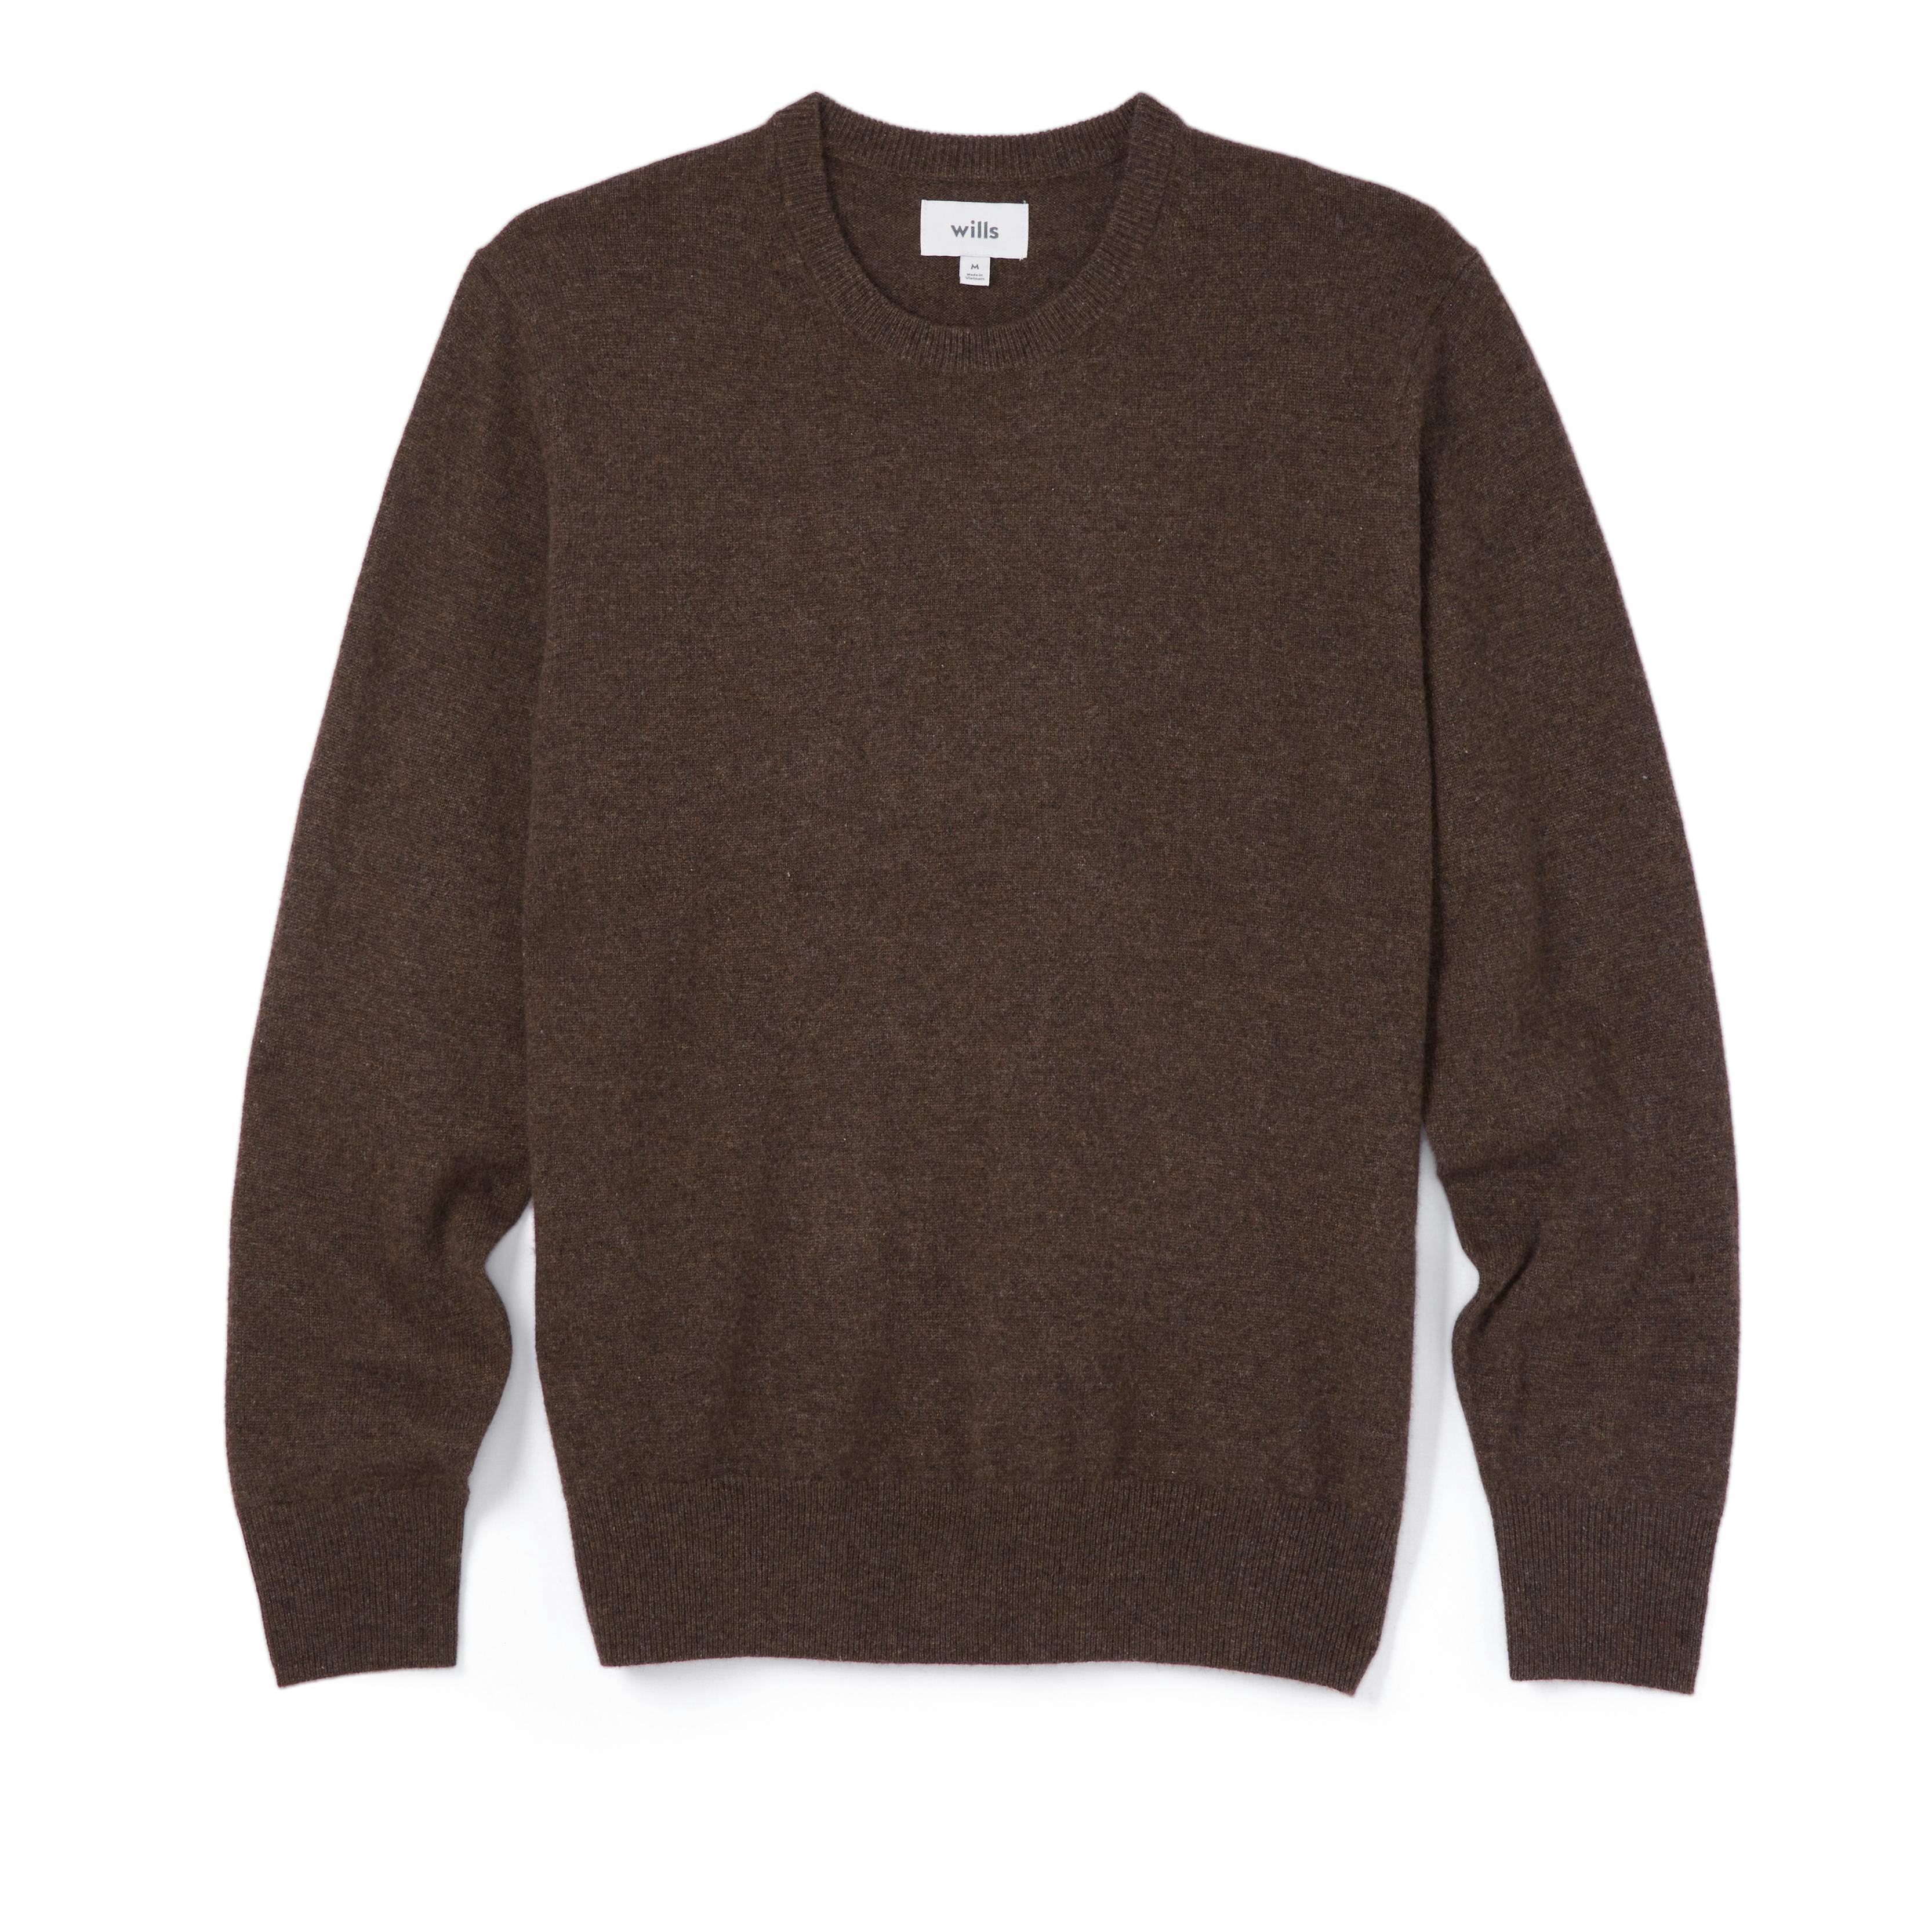 Wills Classic Cashmere Crewneck Sweater - Chestnut, Cashmere Sweaters